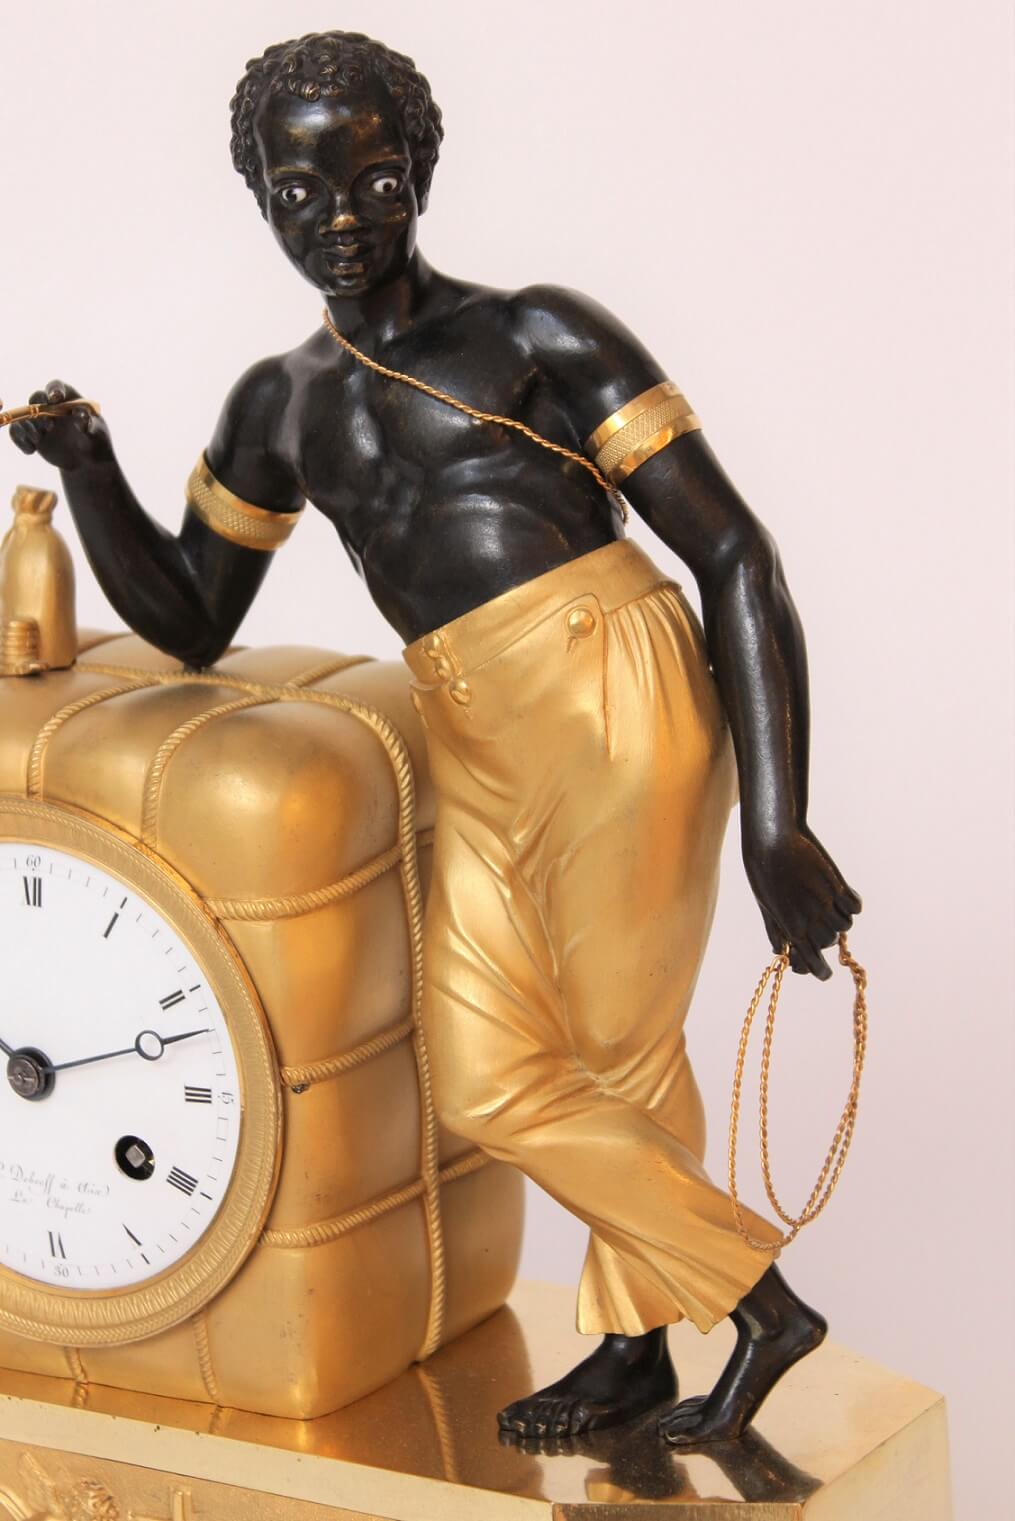 French-Empire-ormolu-bronze-bon sauvage-matelot-antique clock-mantel clock